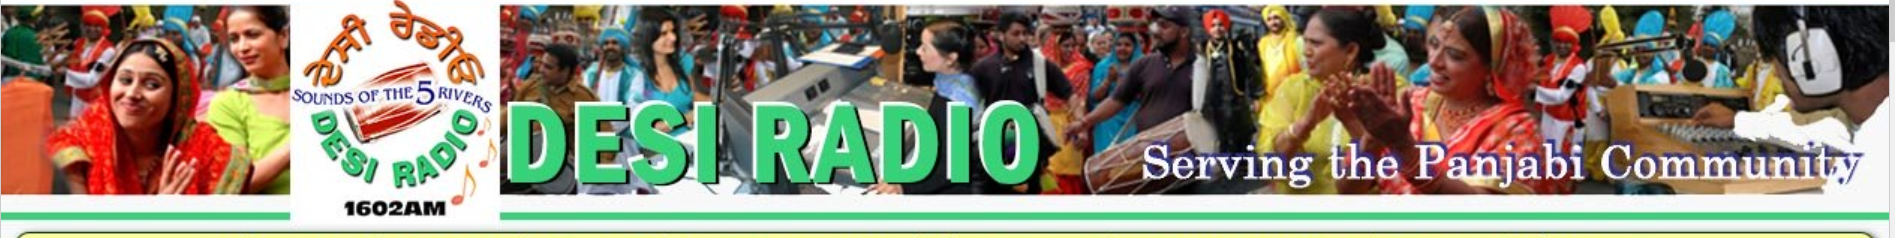 Desi Radio website